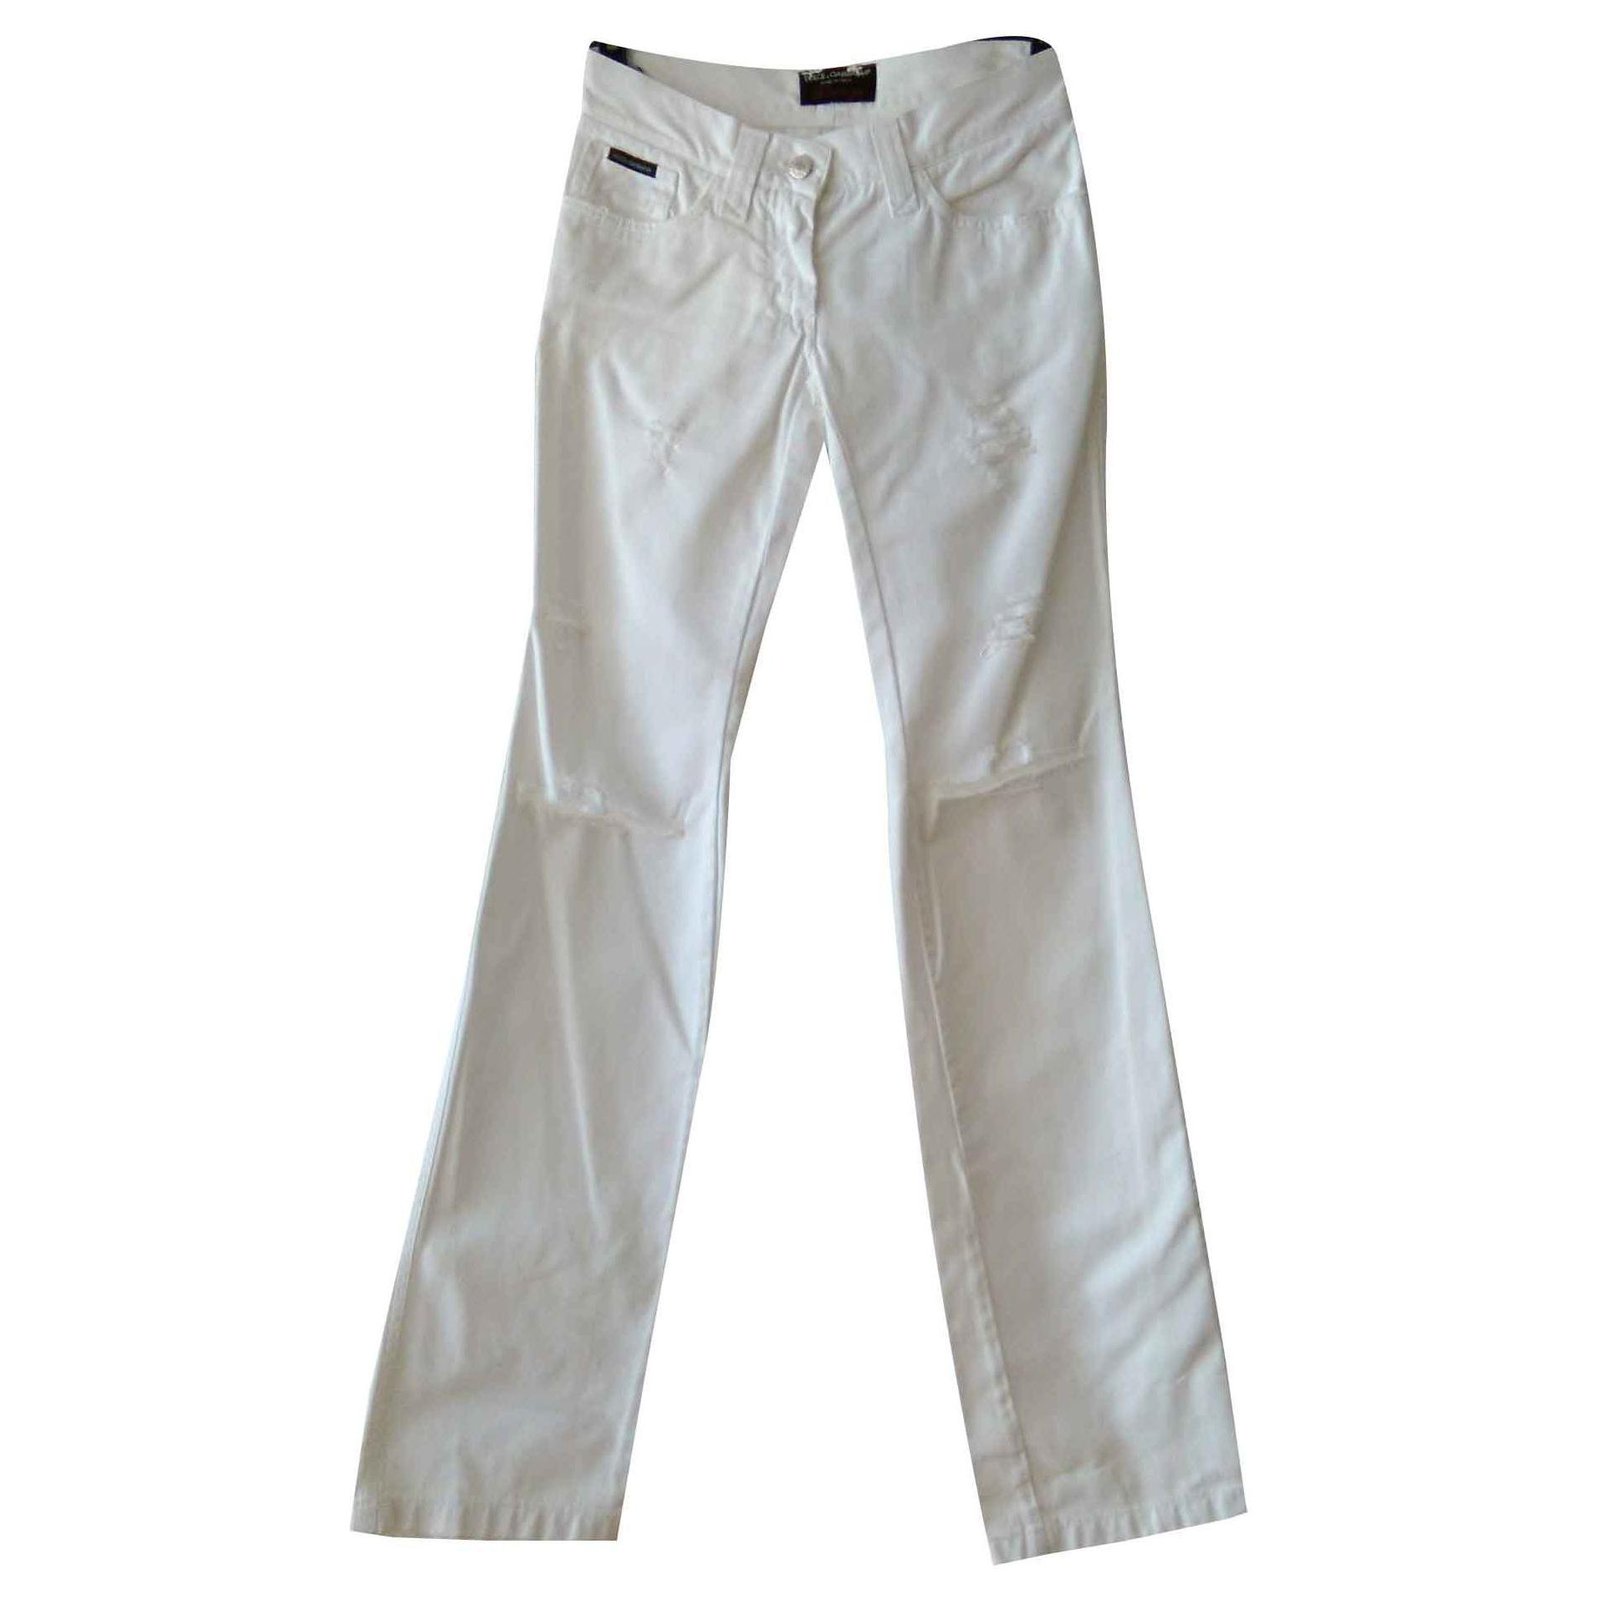 dolce gabbana white jeans